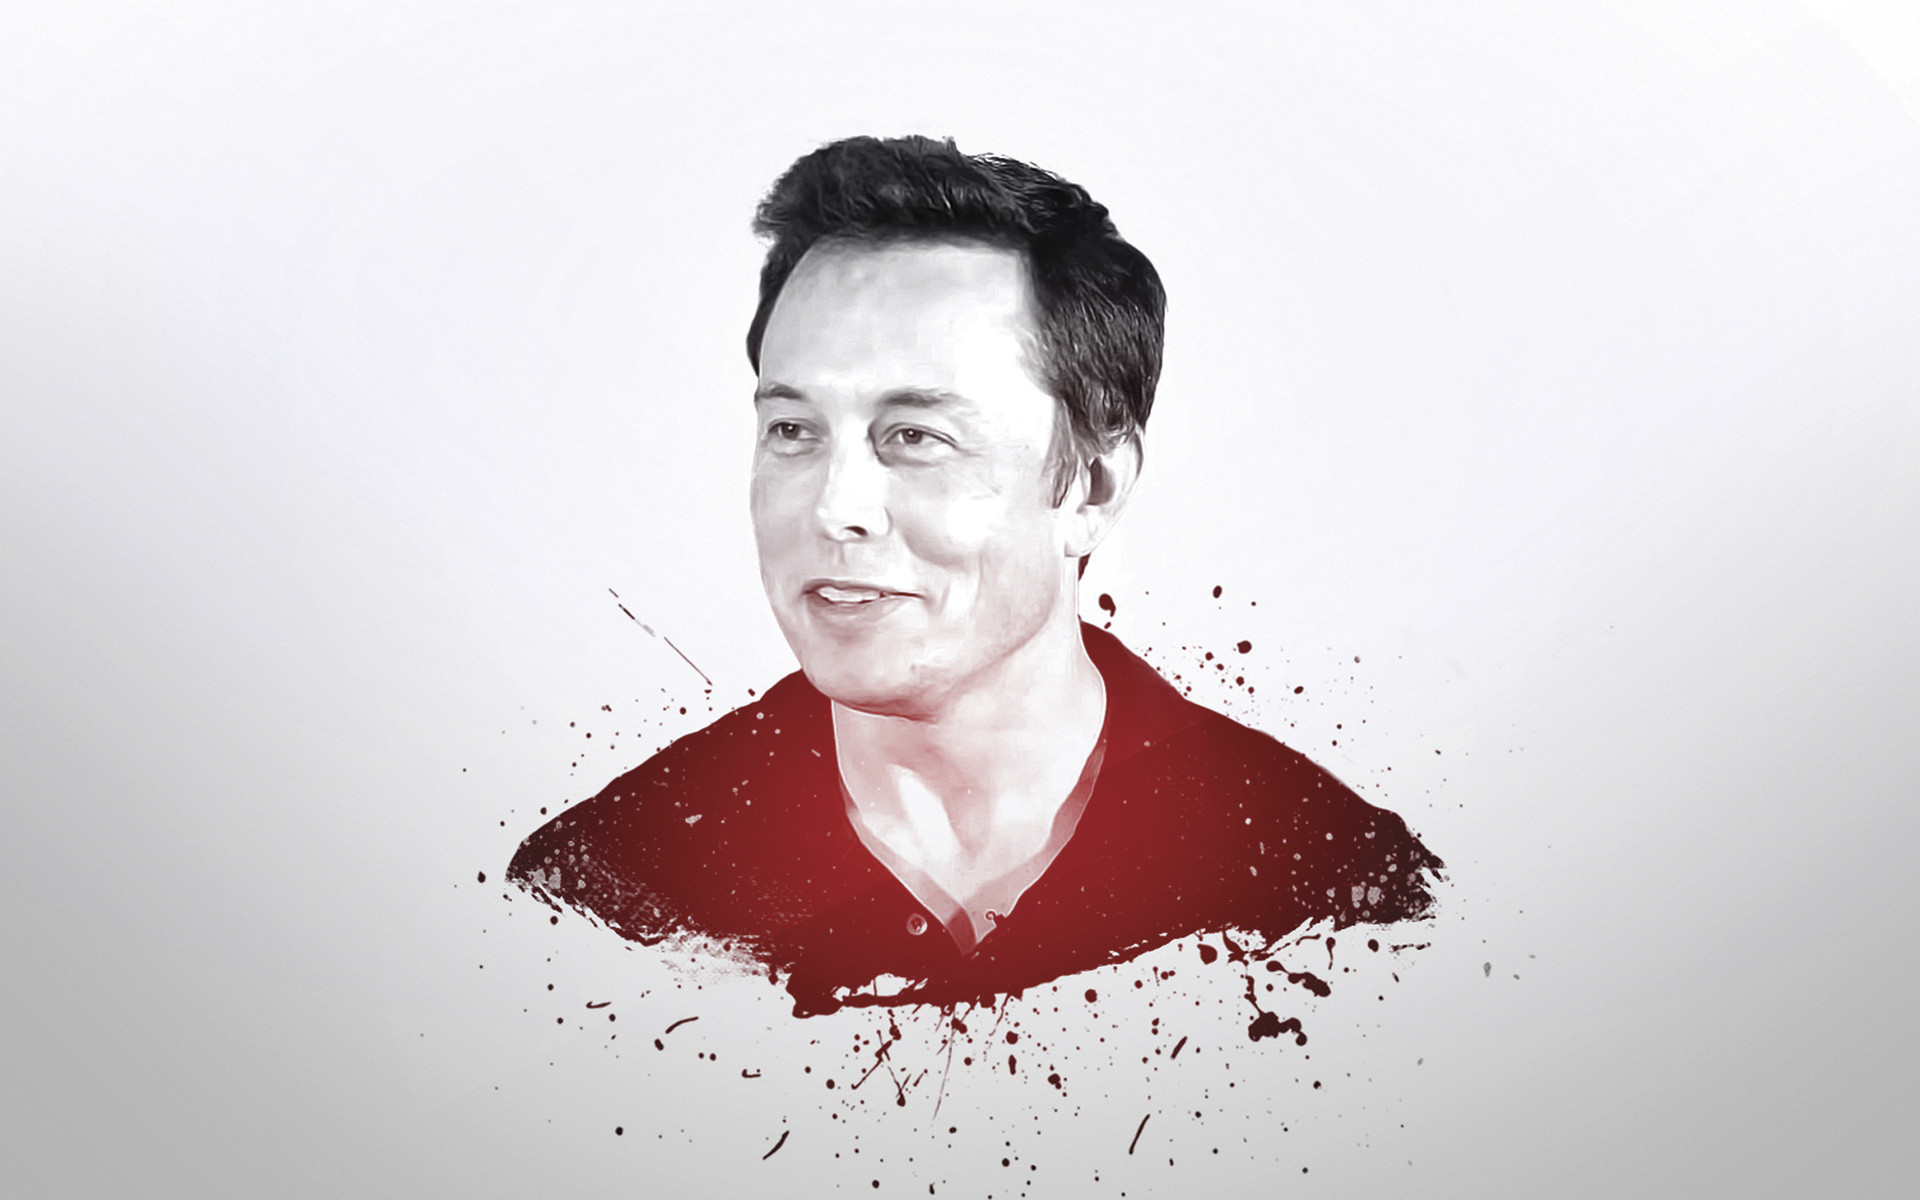 Elon Musk, Spacex, Ceo Of Spacex, Photos Of Elon Musk, Elon Musk